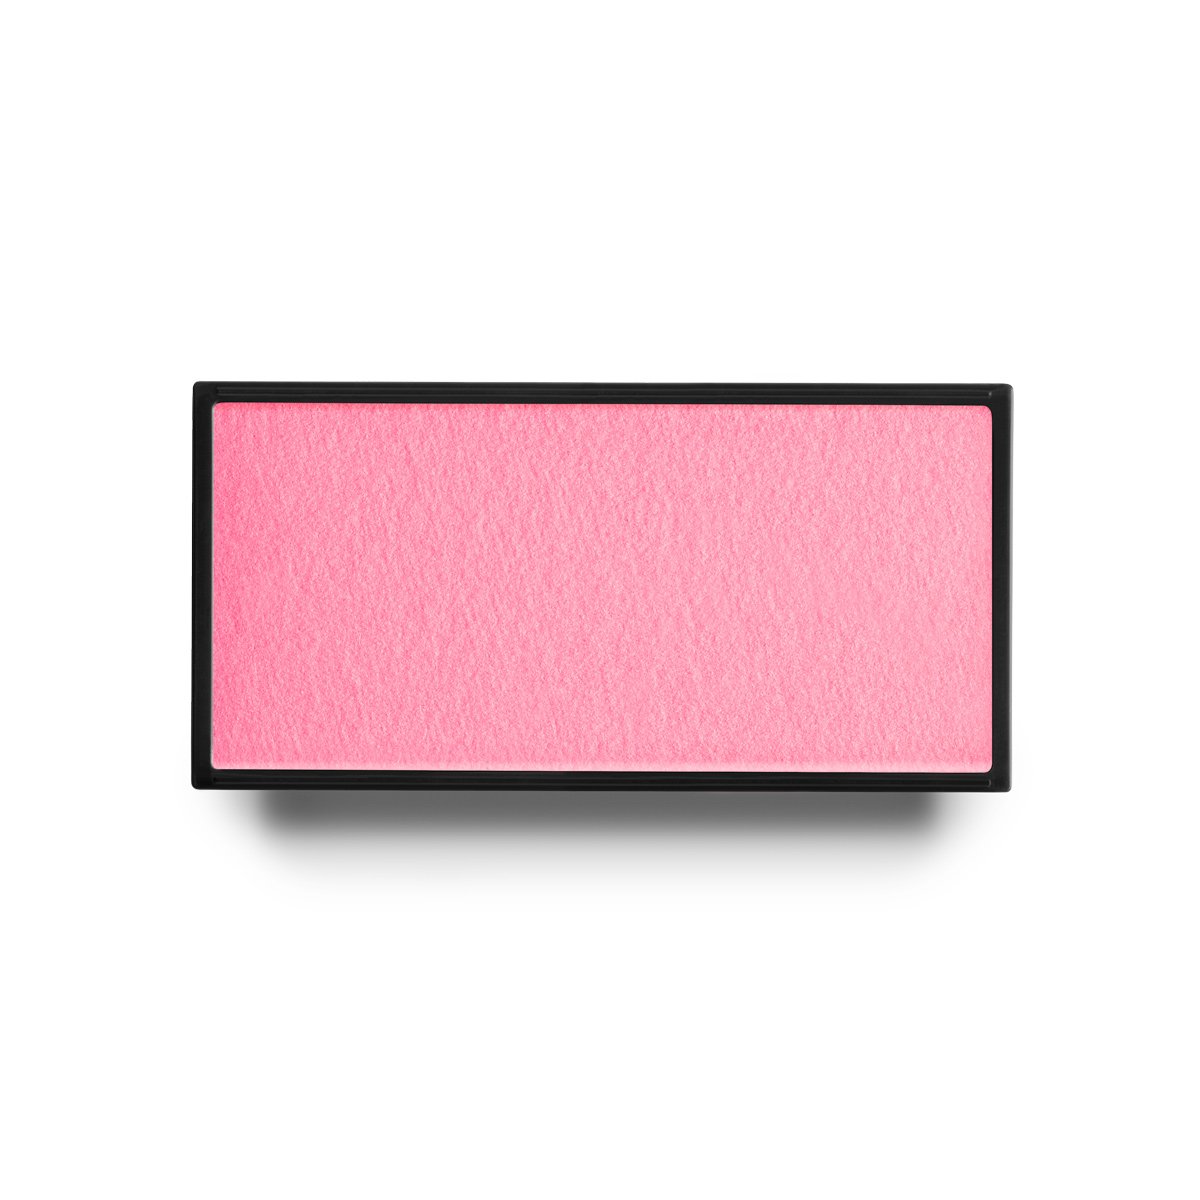 TU ME FAIS ROUGIR - WARM BRIGHT PINK - satin finish powder blush in warm bright pink shade